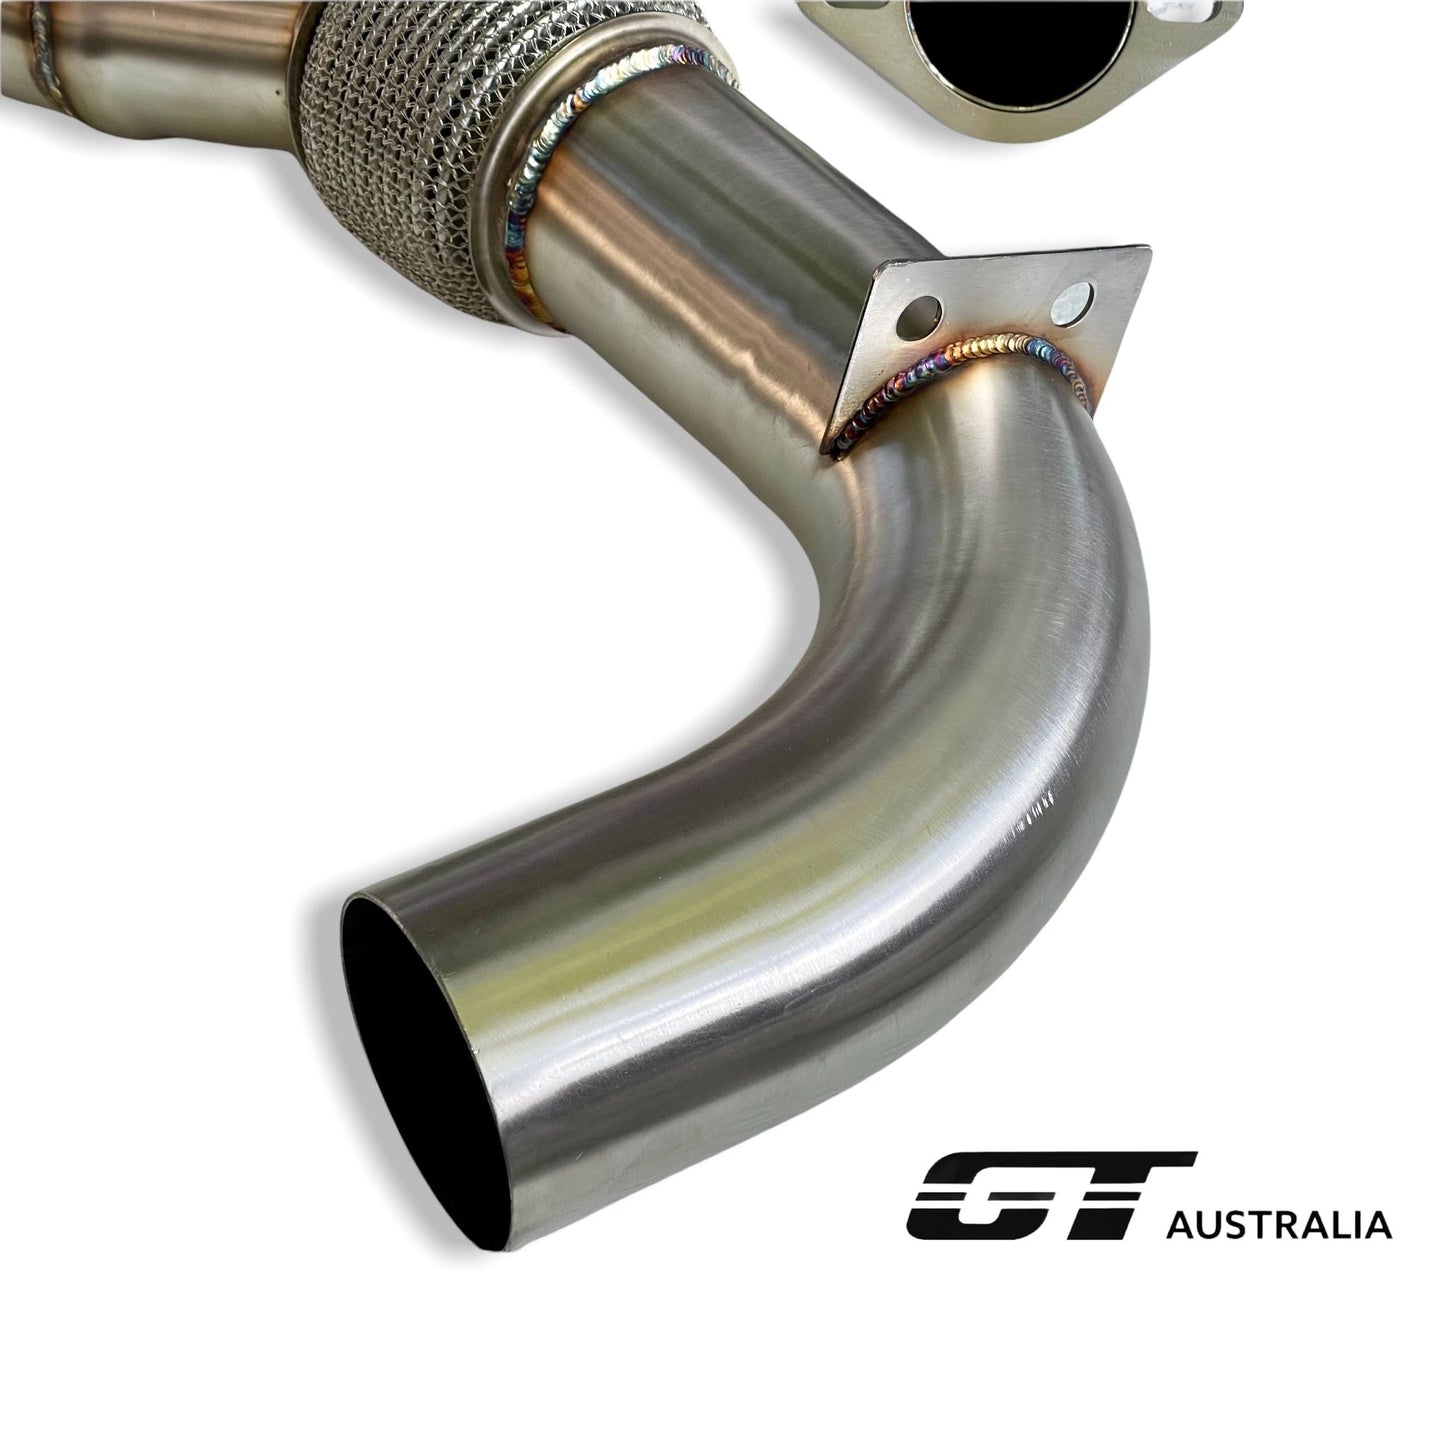 Lotus Evora GT, 400 Stainless Steel 304 Y-pipe by GT Australia